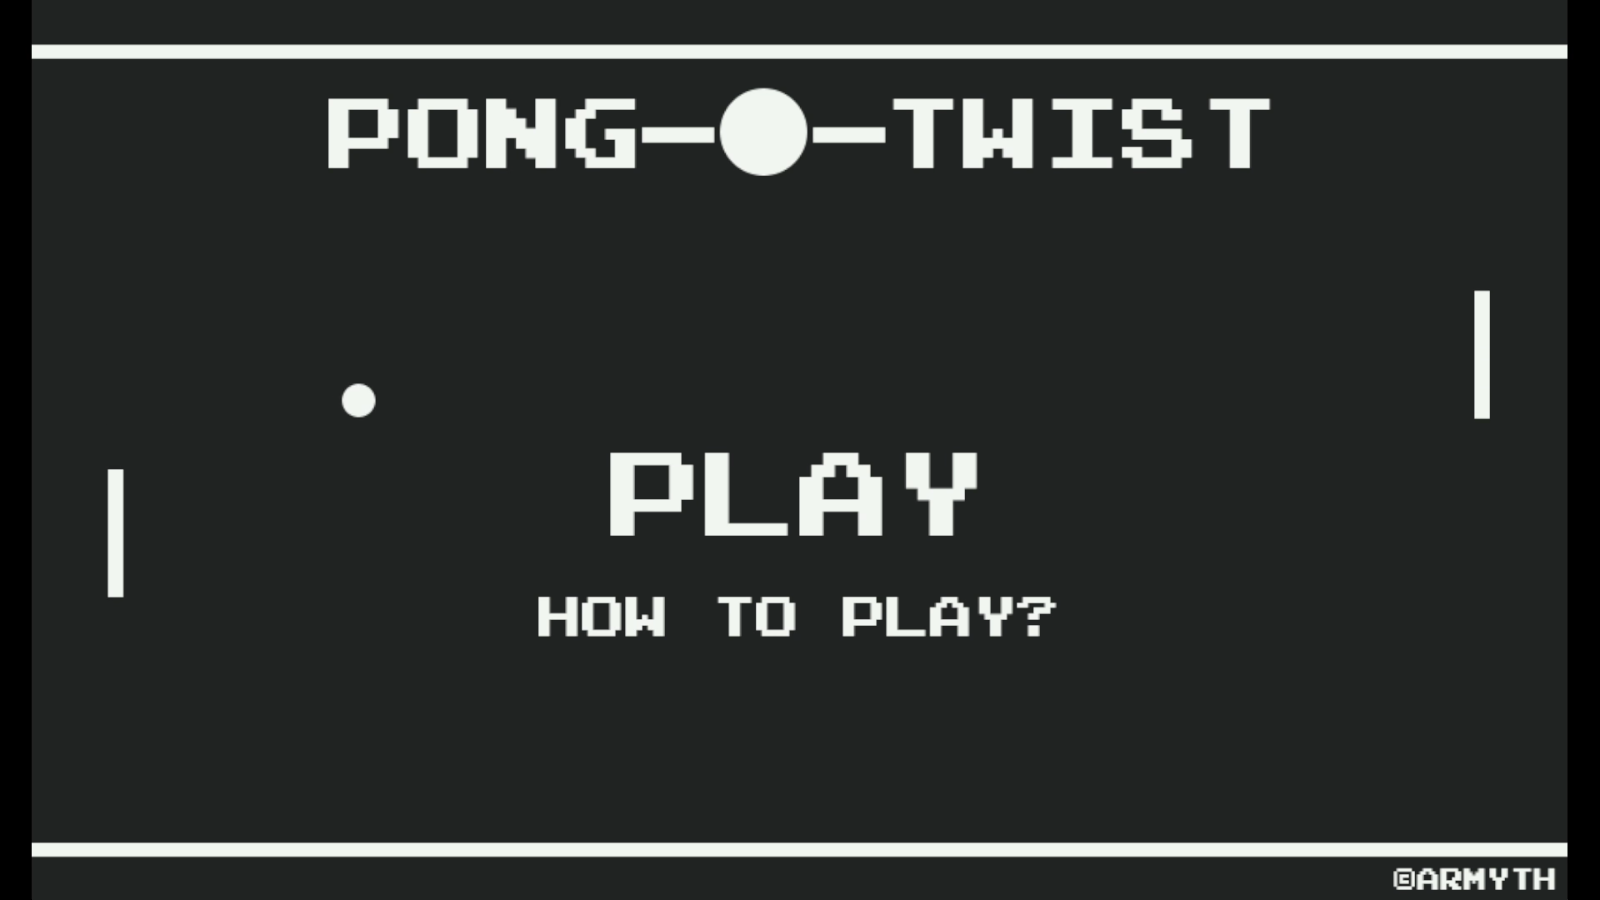 Pong-O-Twist